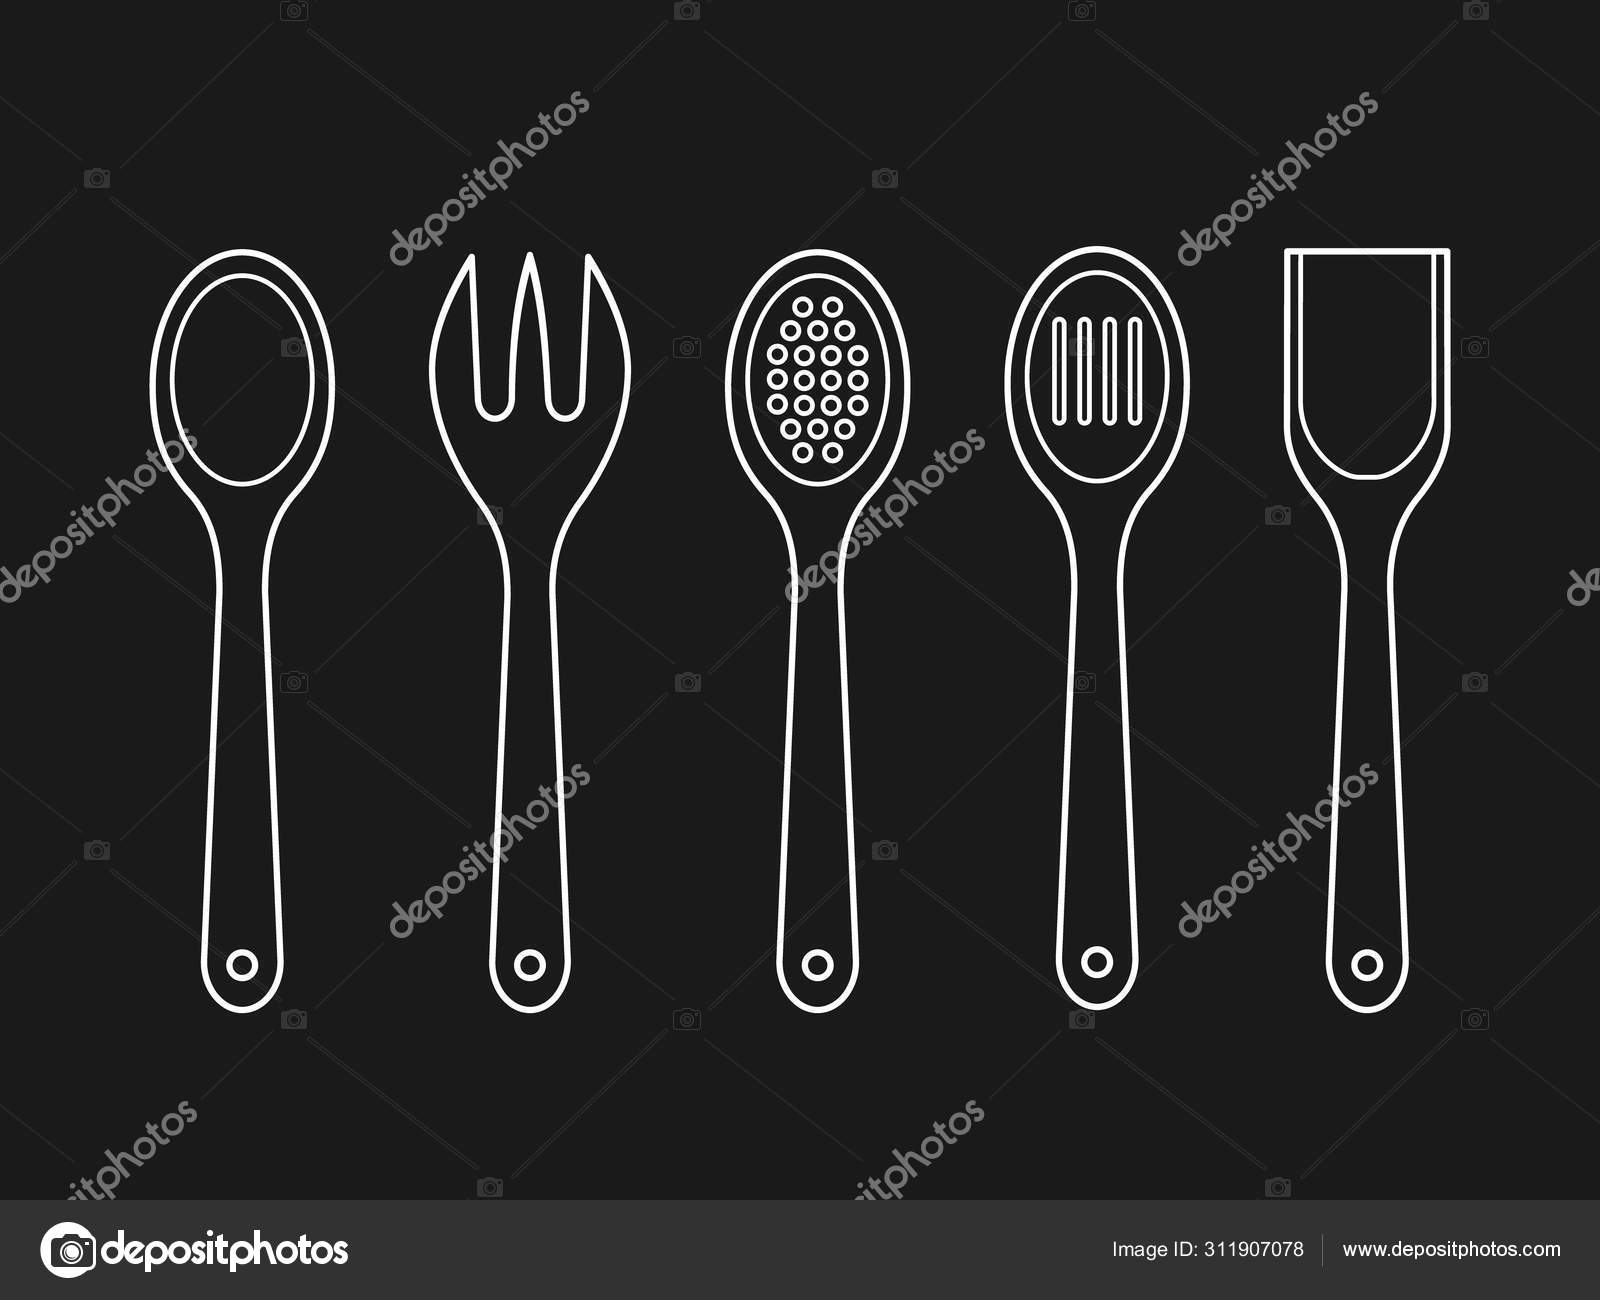 Kitchen Tools Mixing Spoon